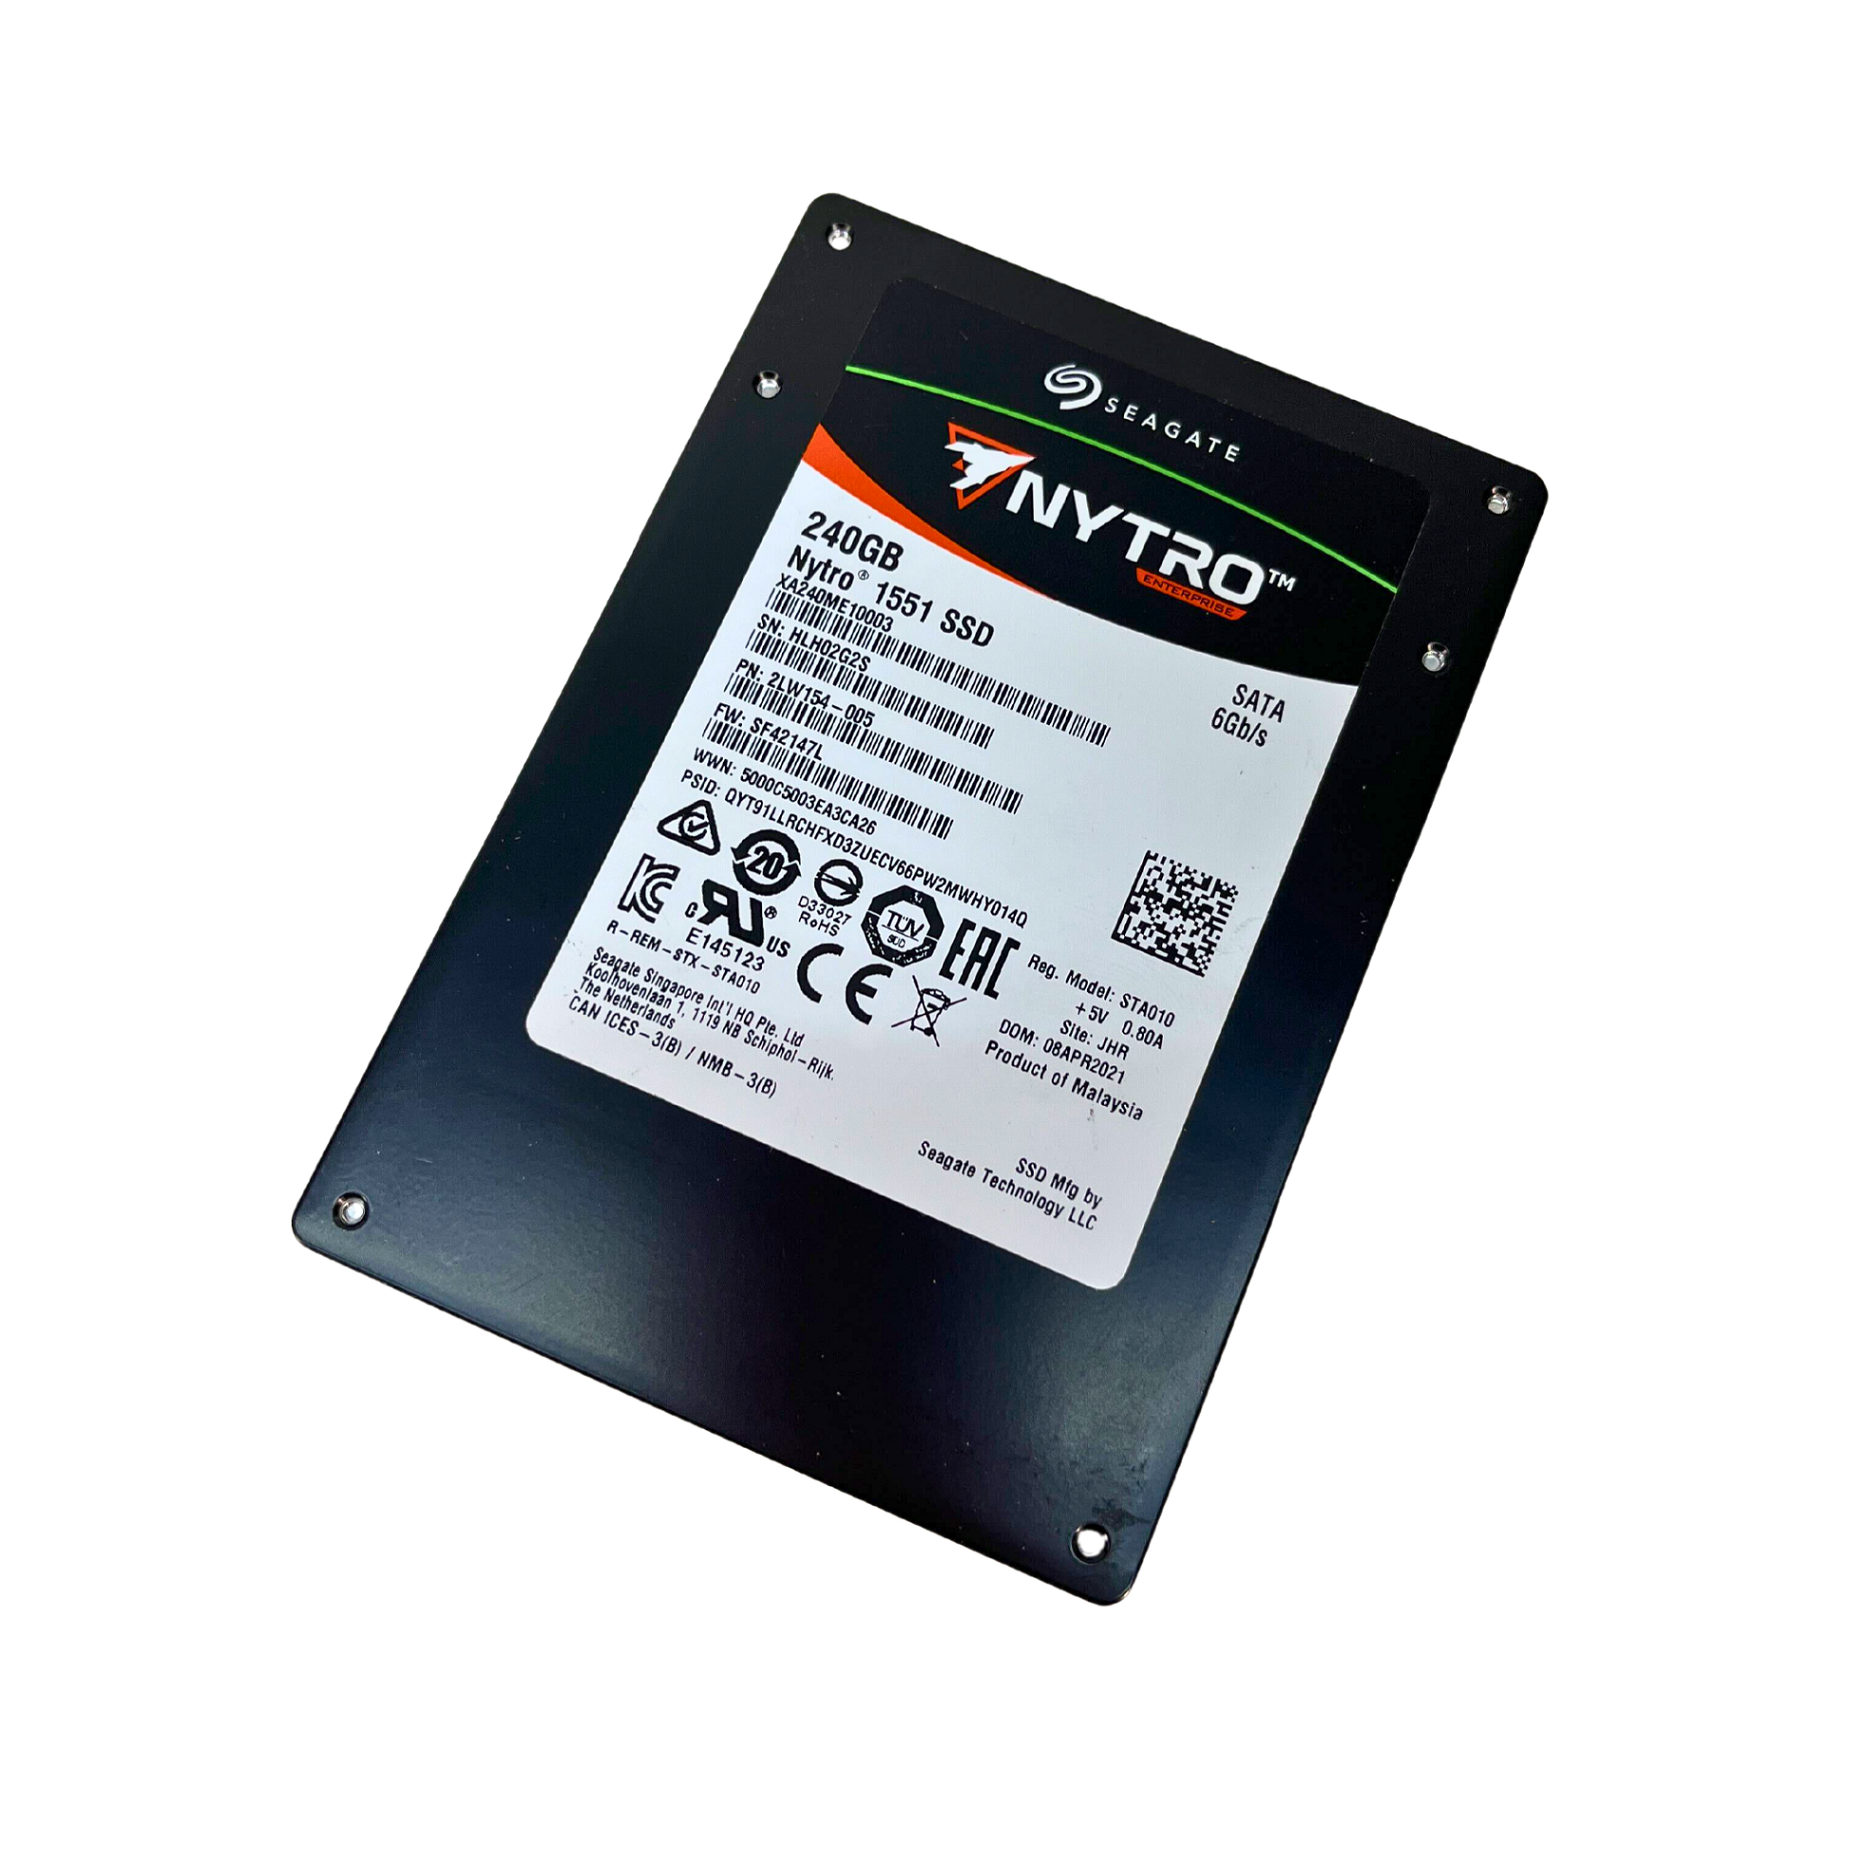 Solid state drive SSD  240 GB - internal - 2.5